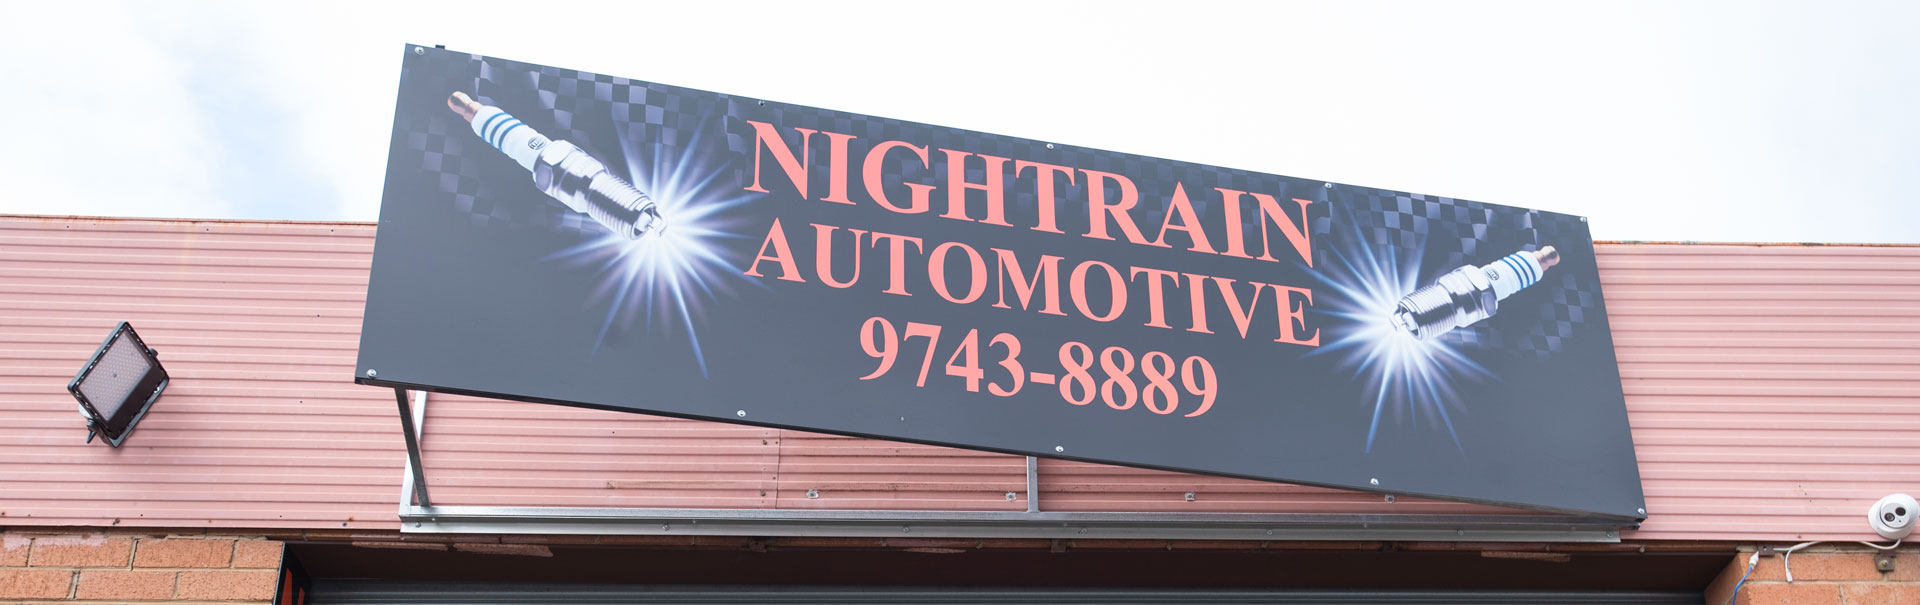 Nightrain Automotive